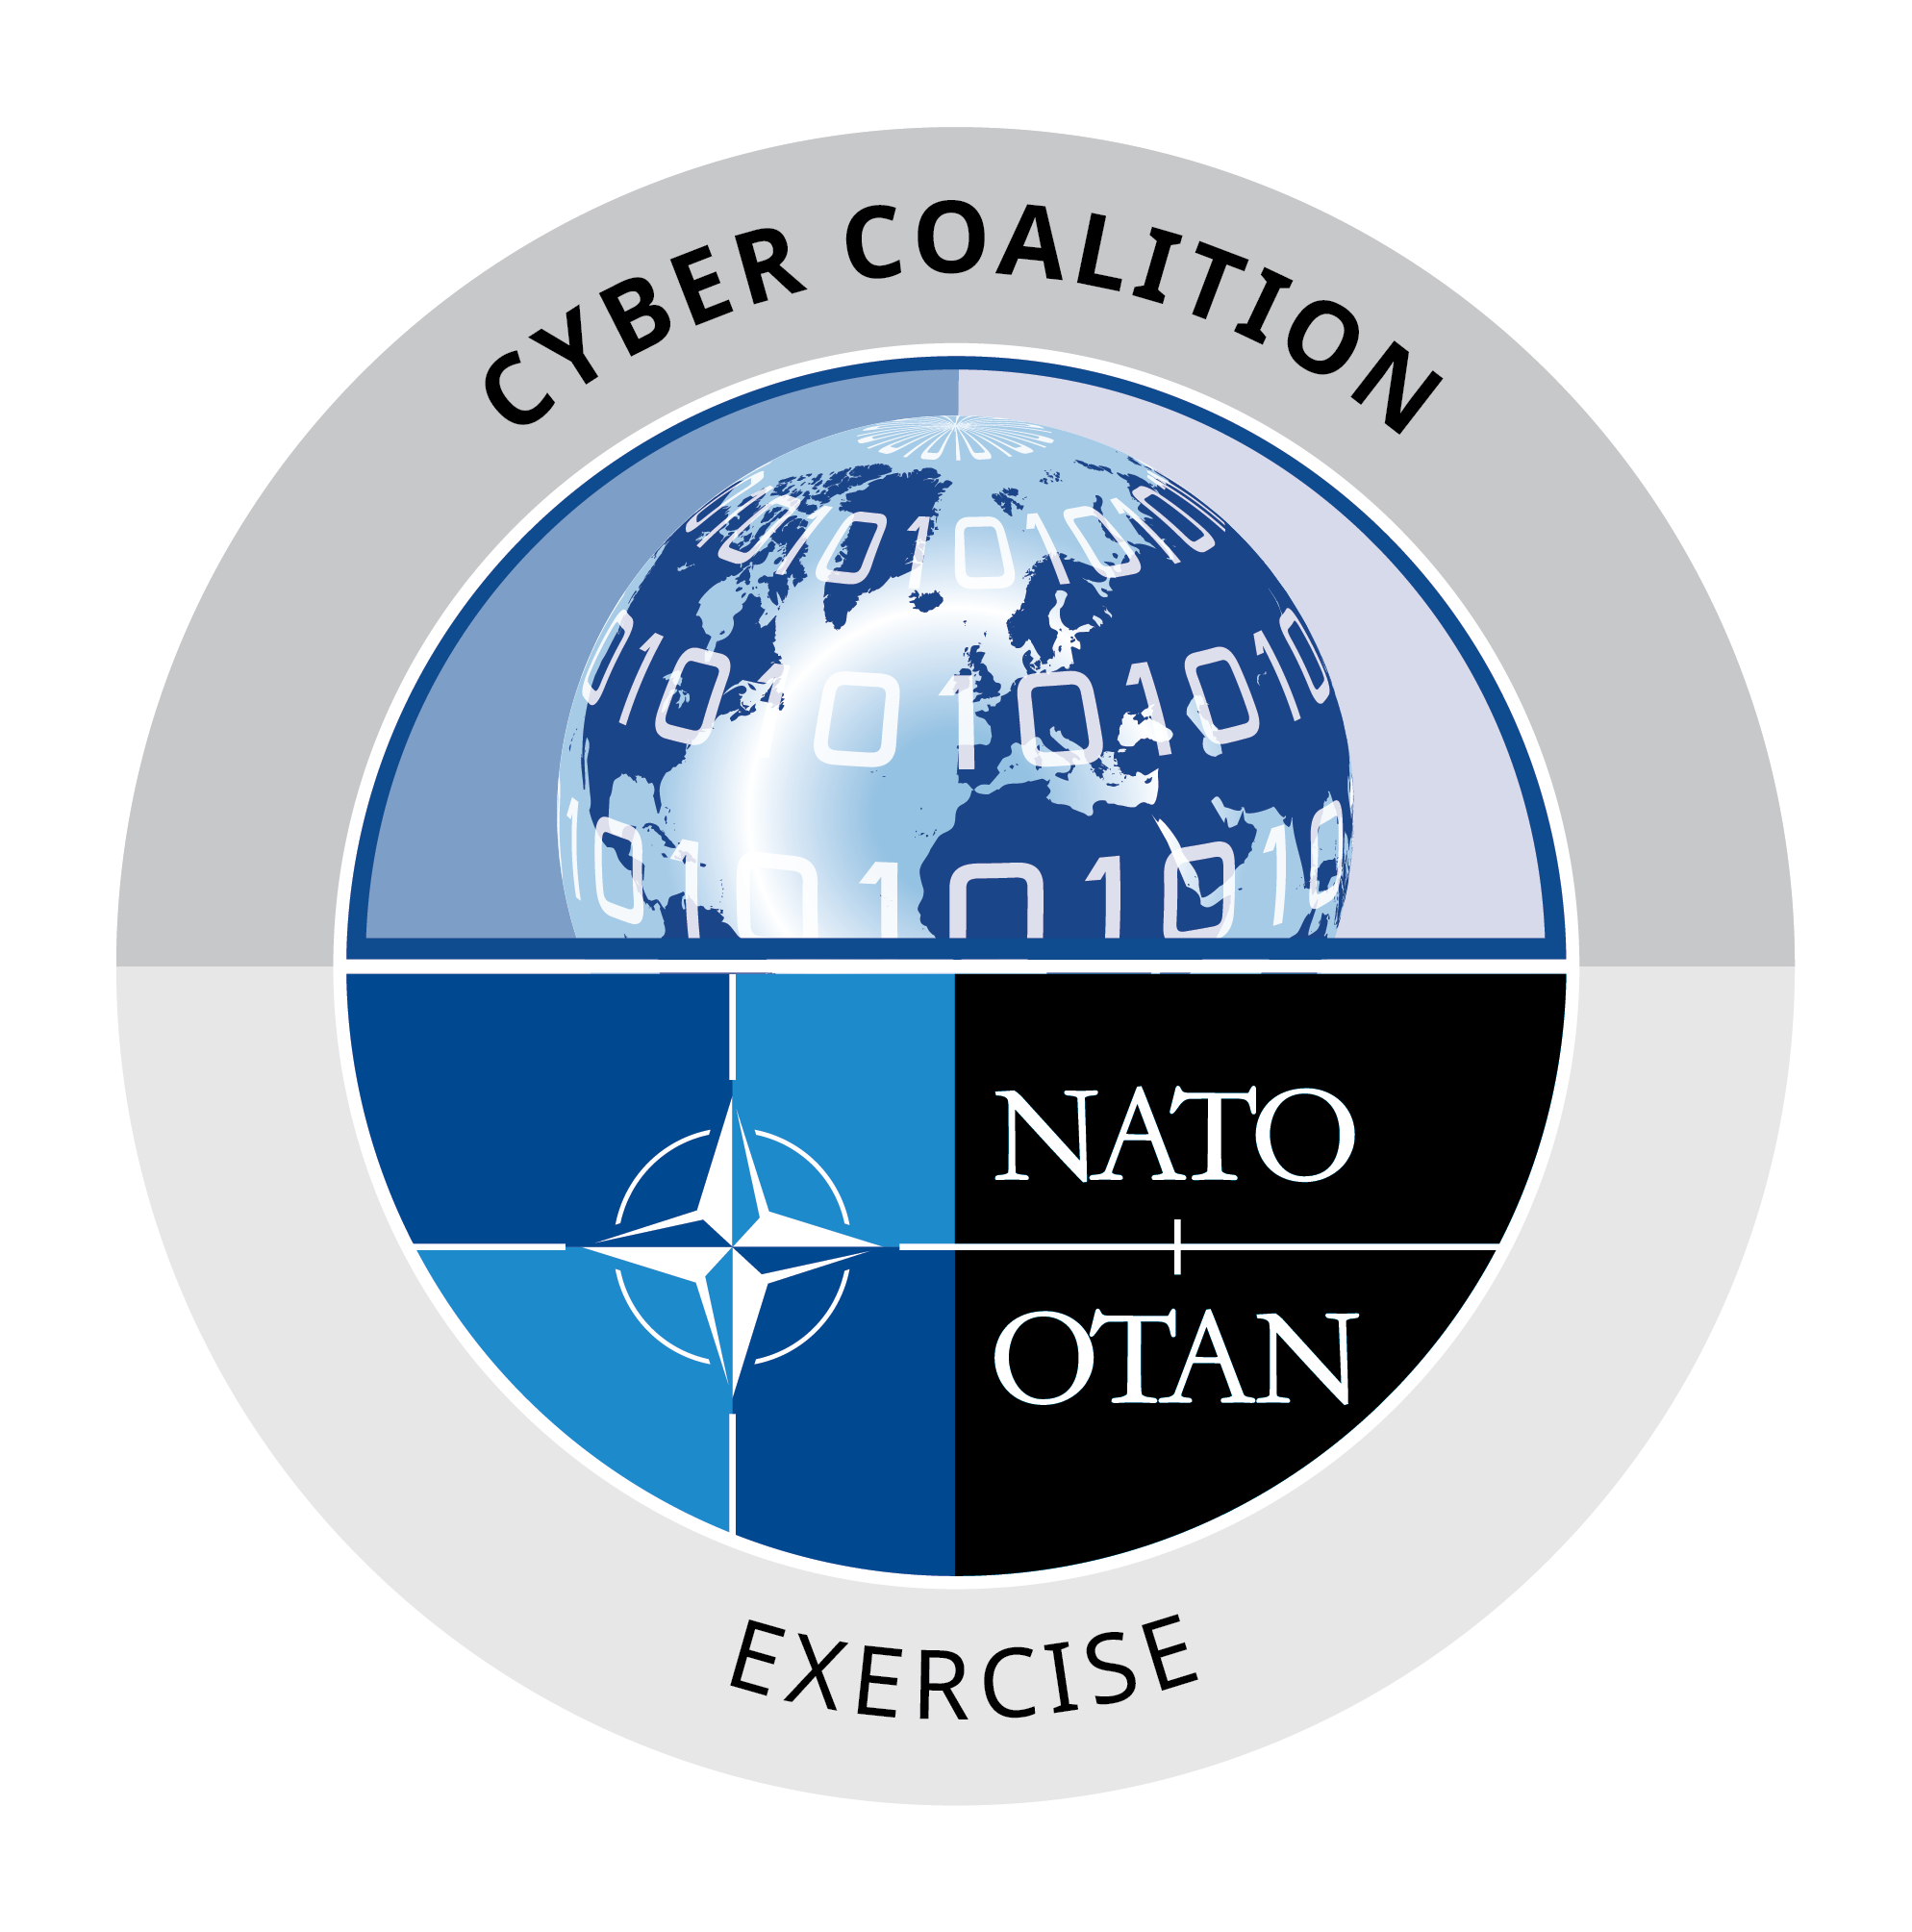 Cyber defense training event logo.